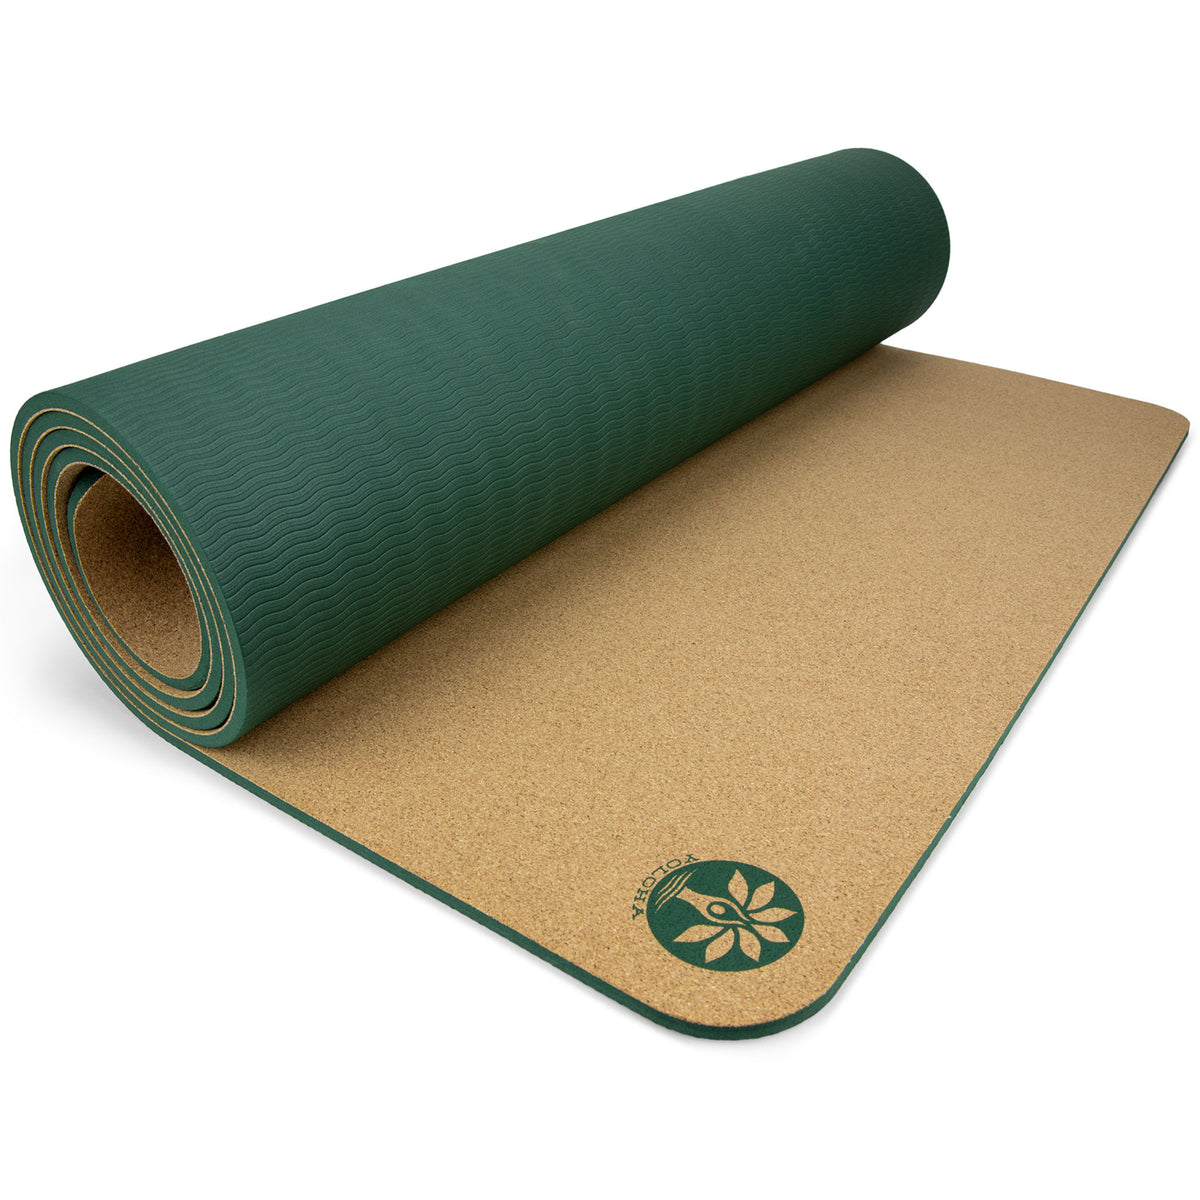 KORI Yoga mat Cream, Accessories, JOSH V Home